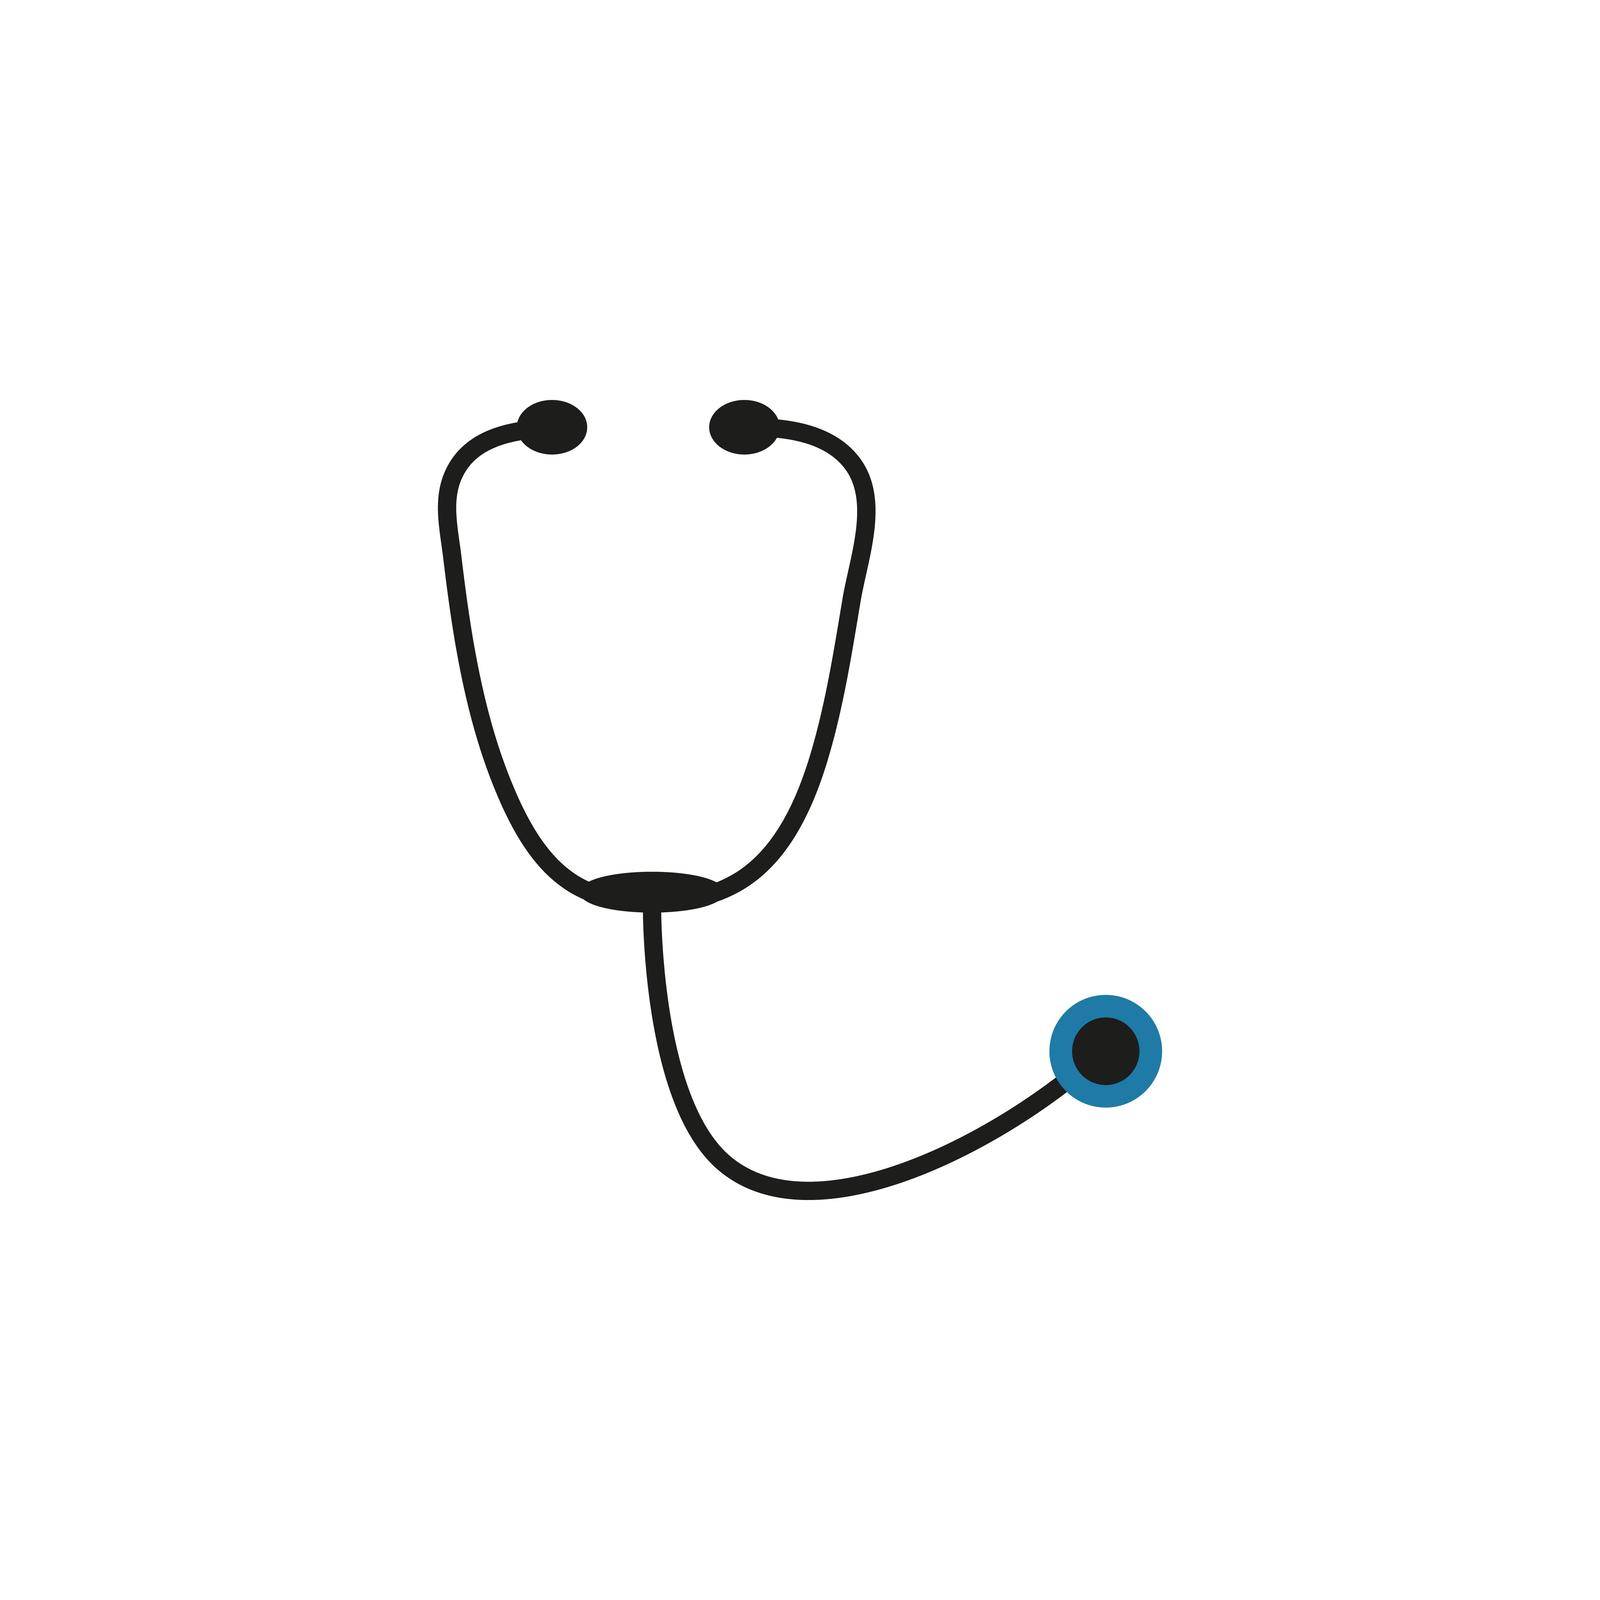 Stethoscope line icon vector illustration by TassiaK